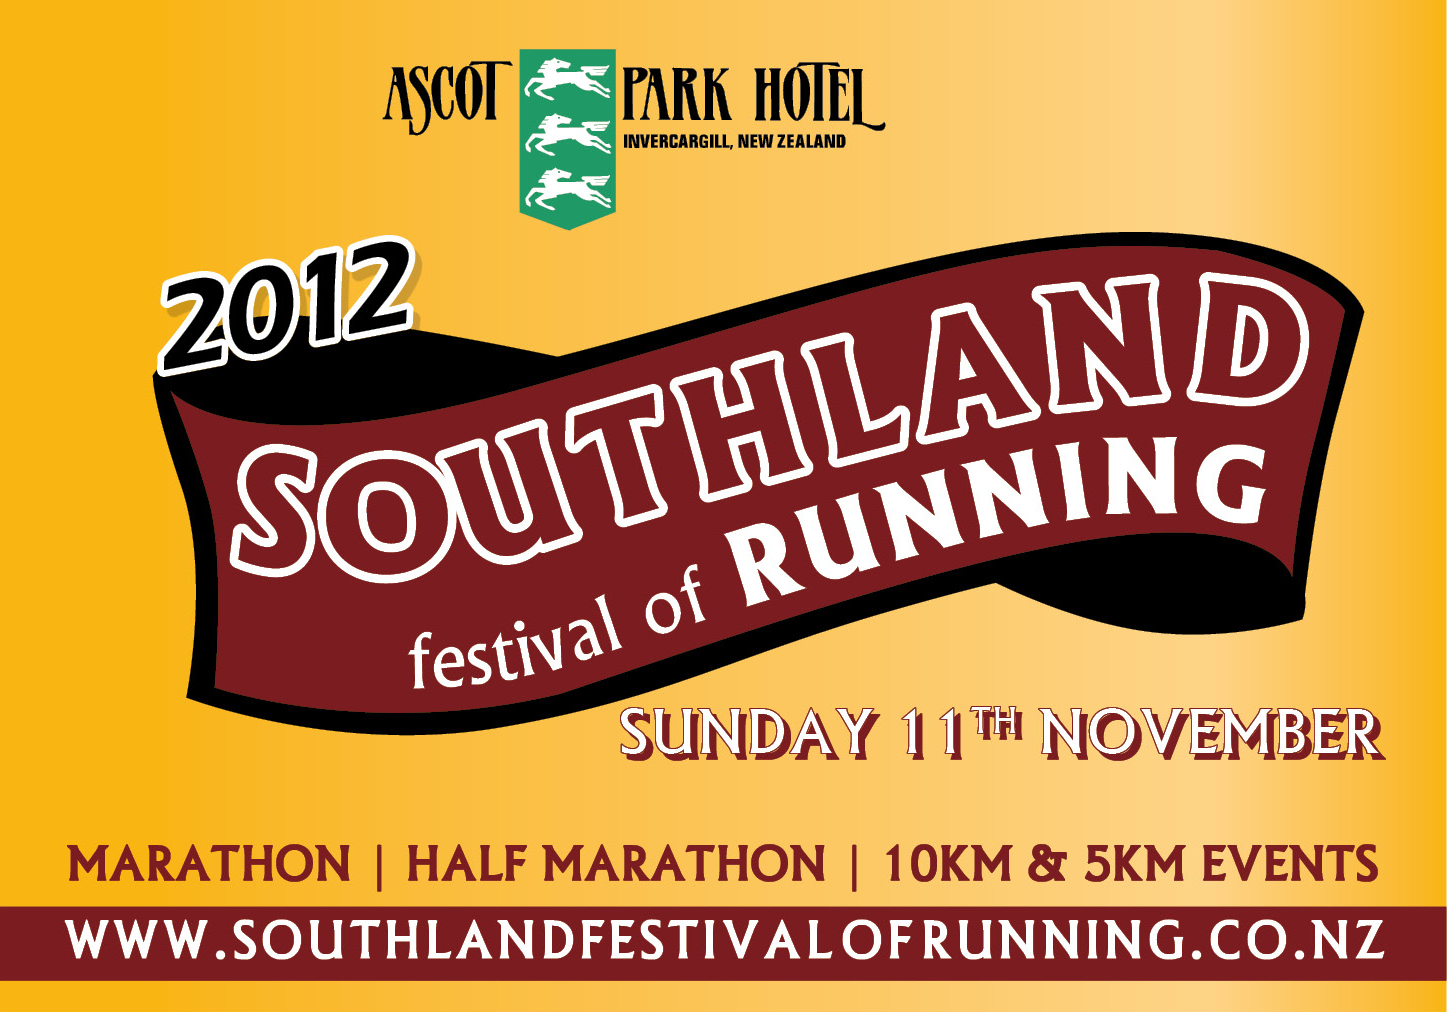 Ascot Park Hotel Southland Festival of Running